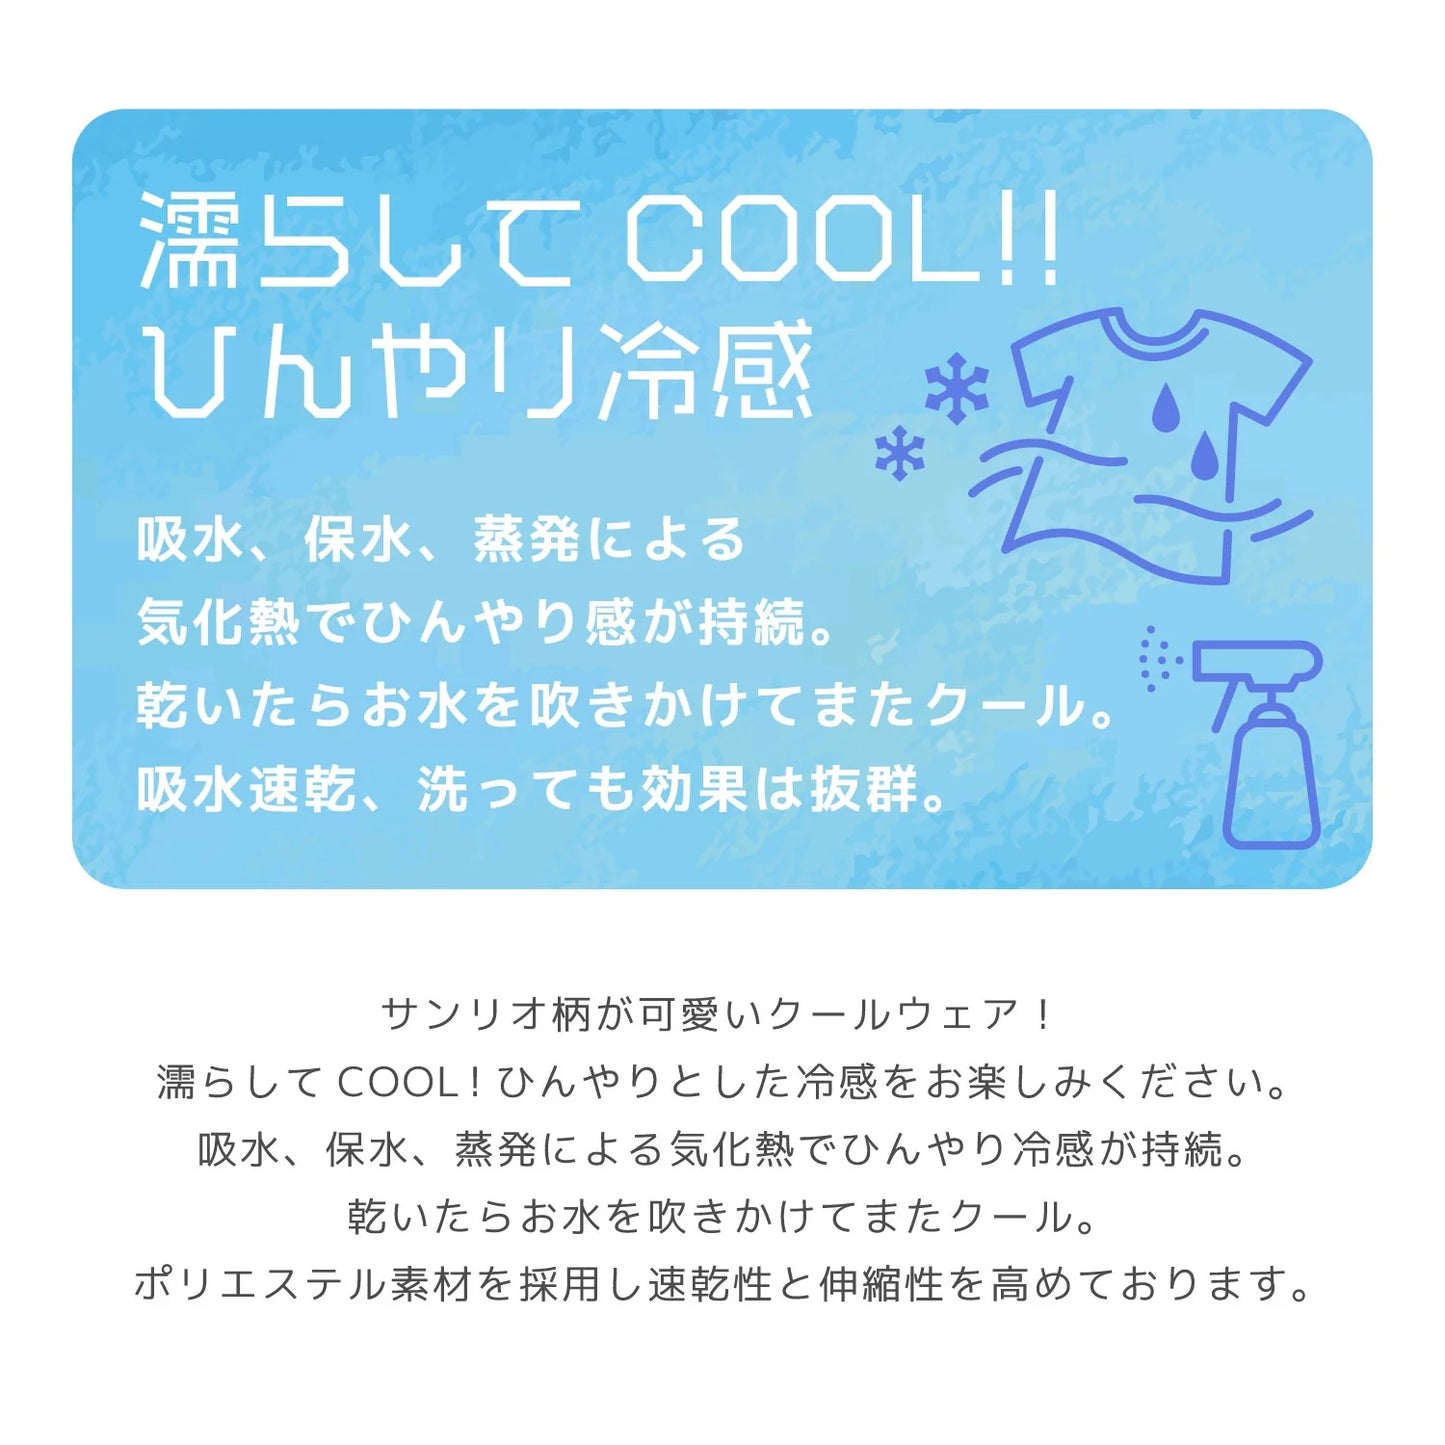 Sanrio Hello Kitty Cool T-shirt